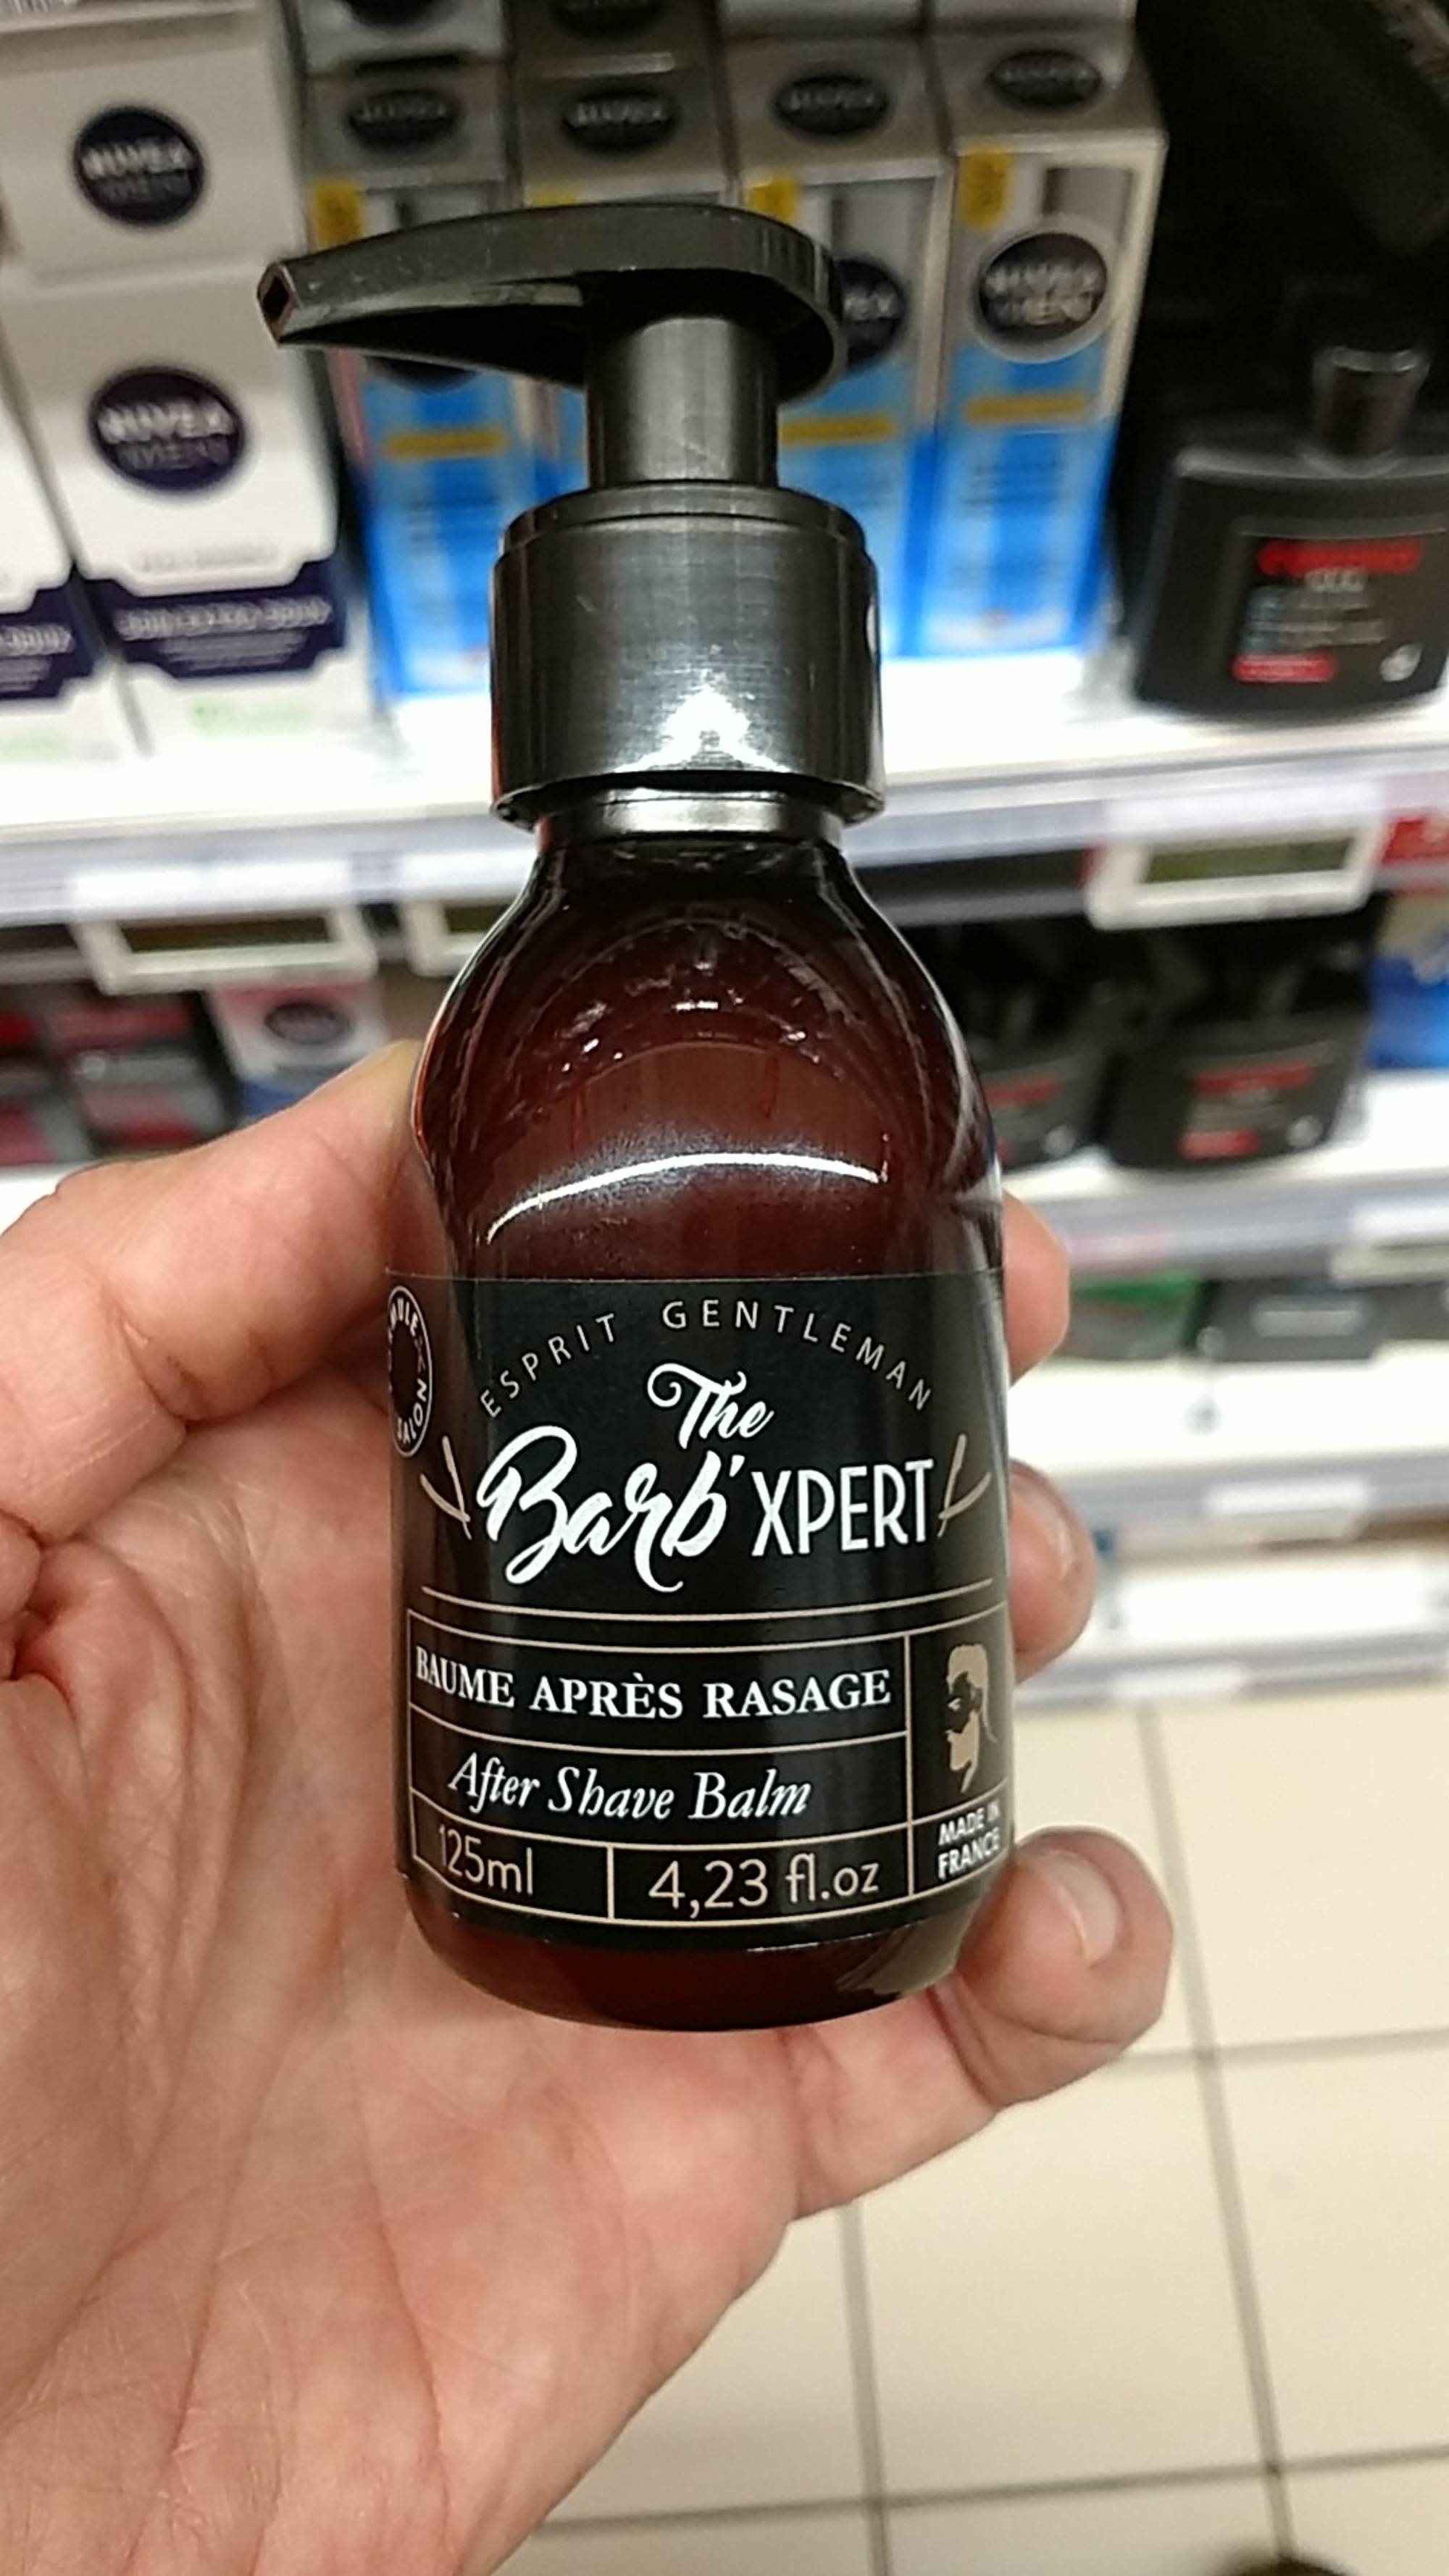 THE BARB'XPERT - Esprit gentleman - Baume après rasage